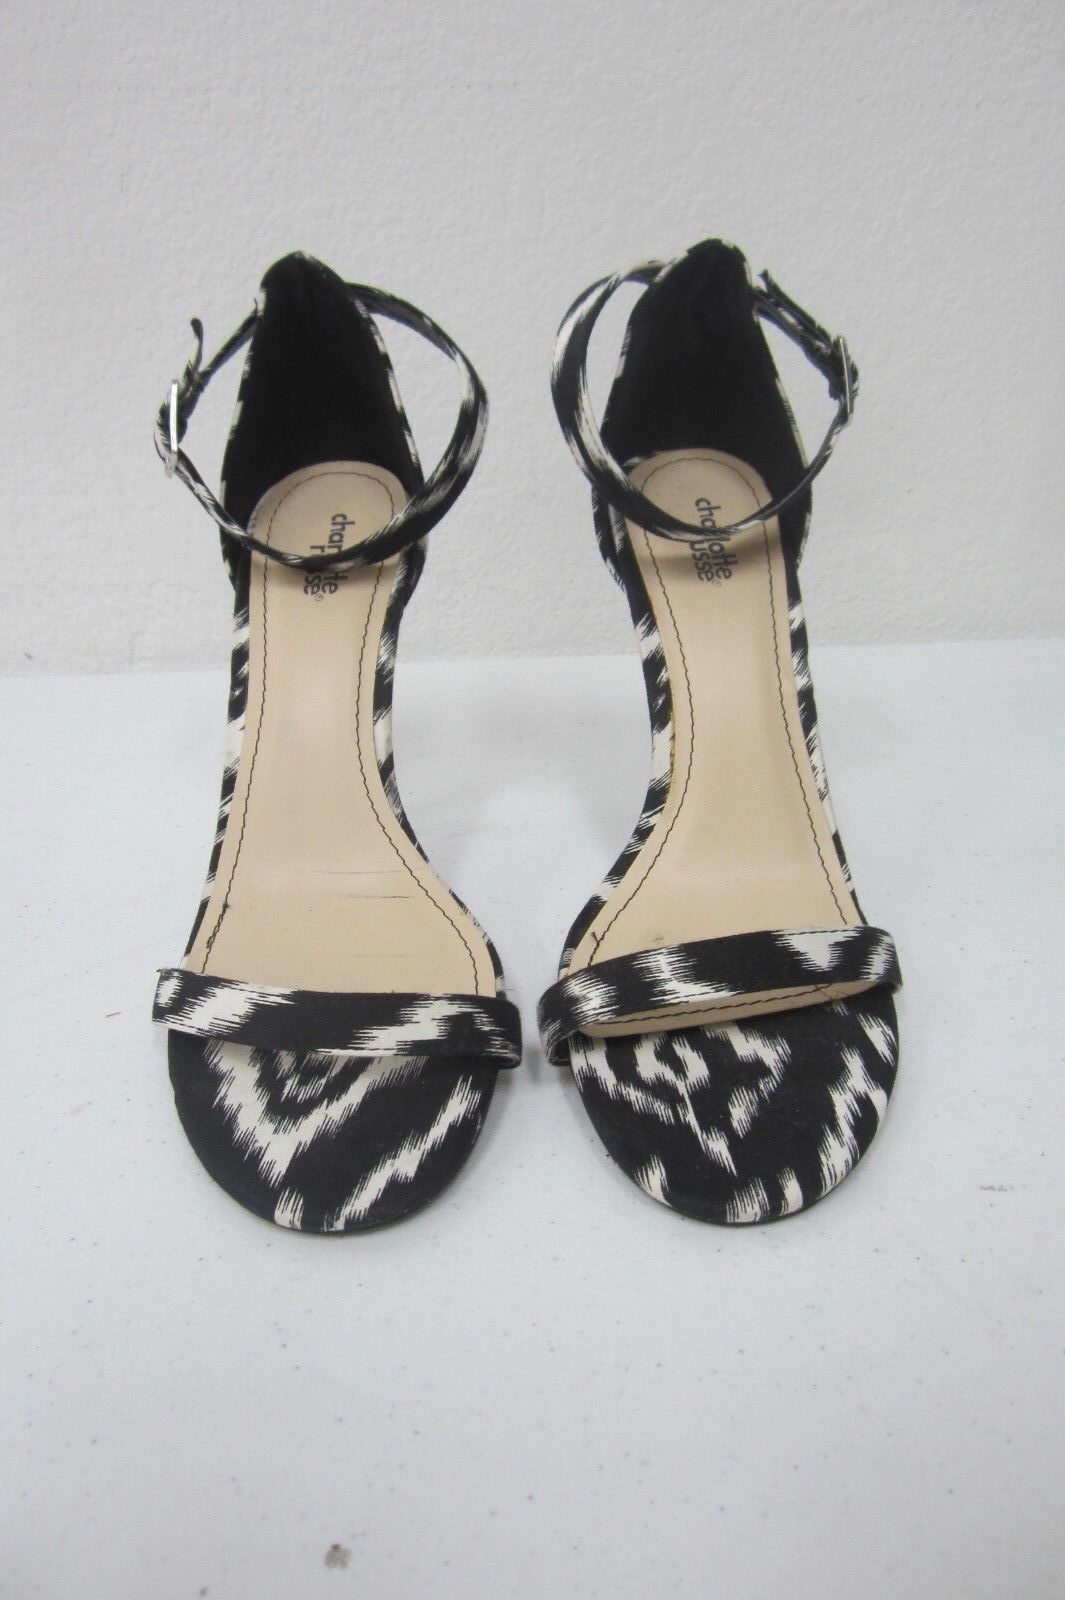 *NEW*  Charlotte Russe 4.5" High Heel Black/White Shoe size 10